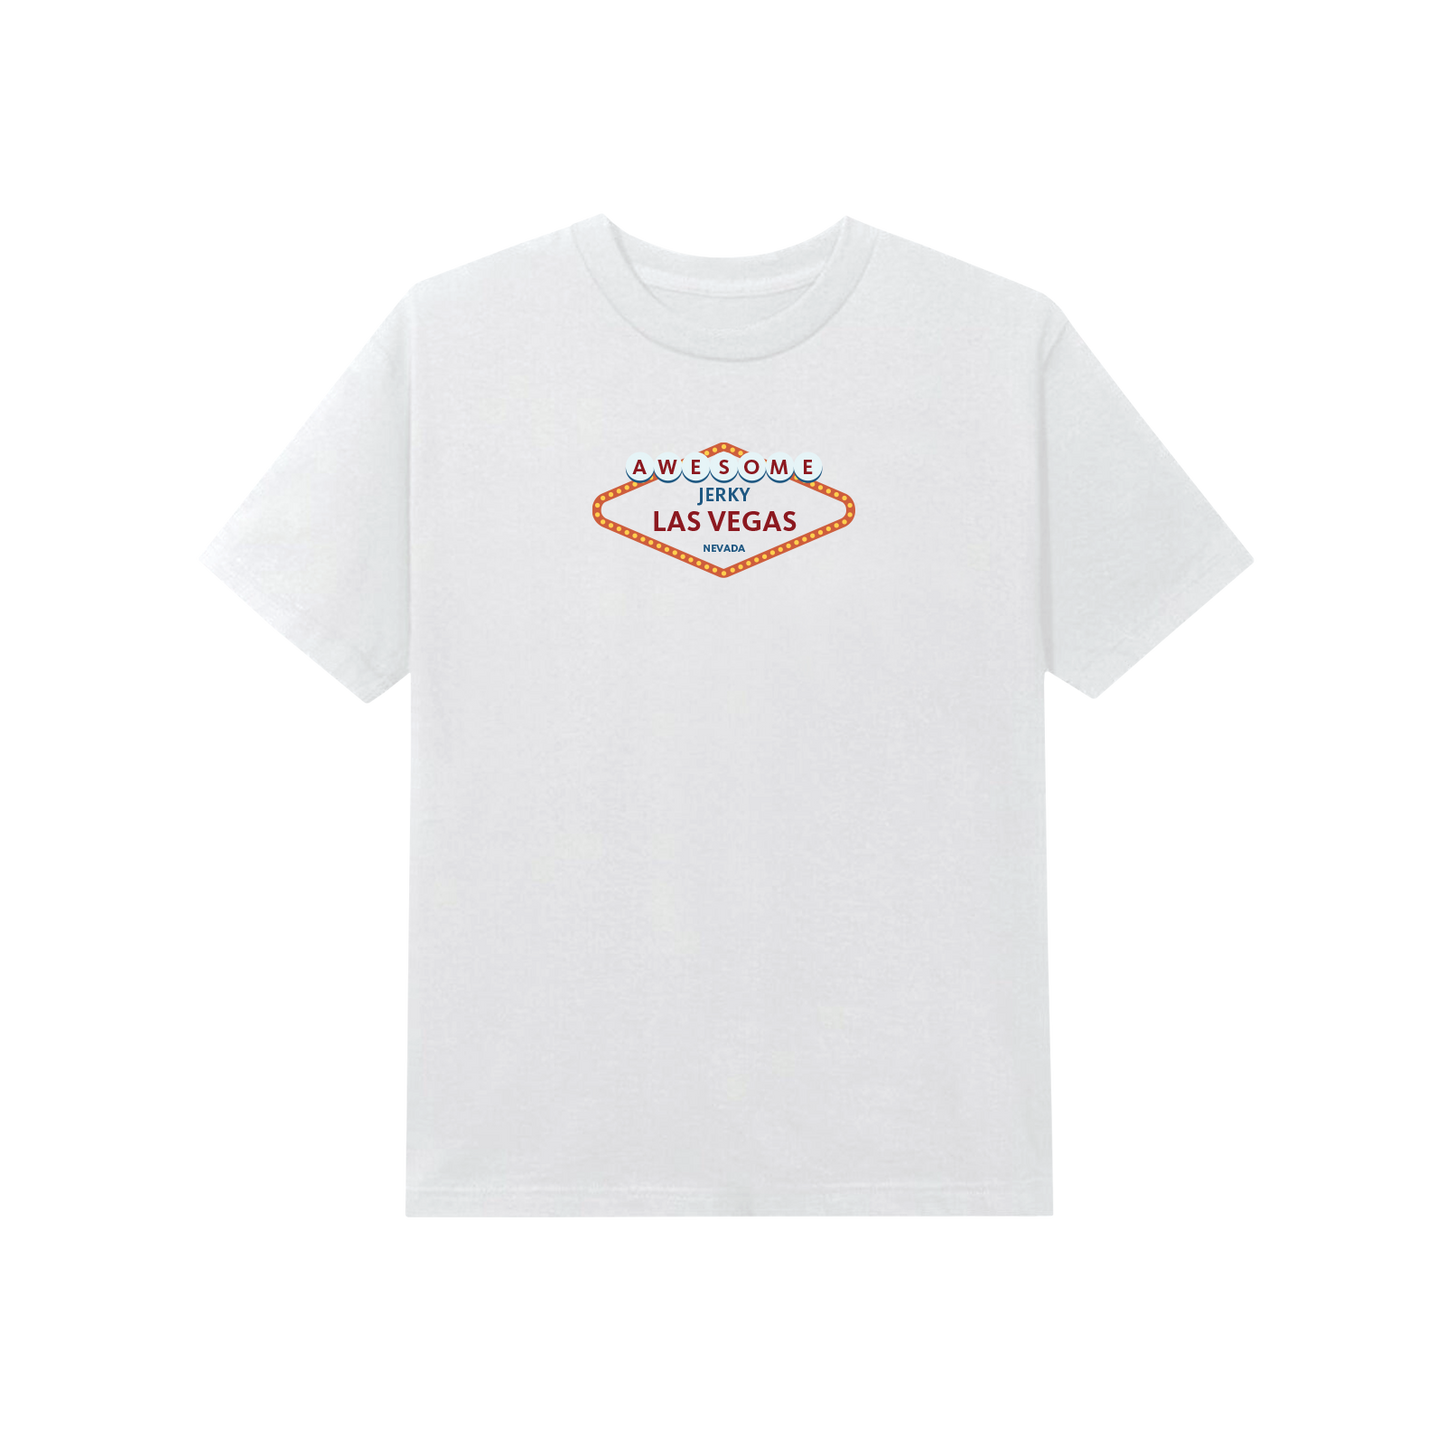 Chumlee's Awesome Jerky Las Vegas Short Sleeve T-Shirt, White